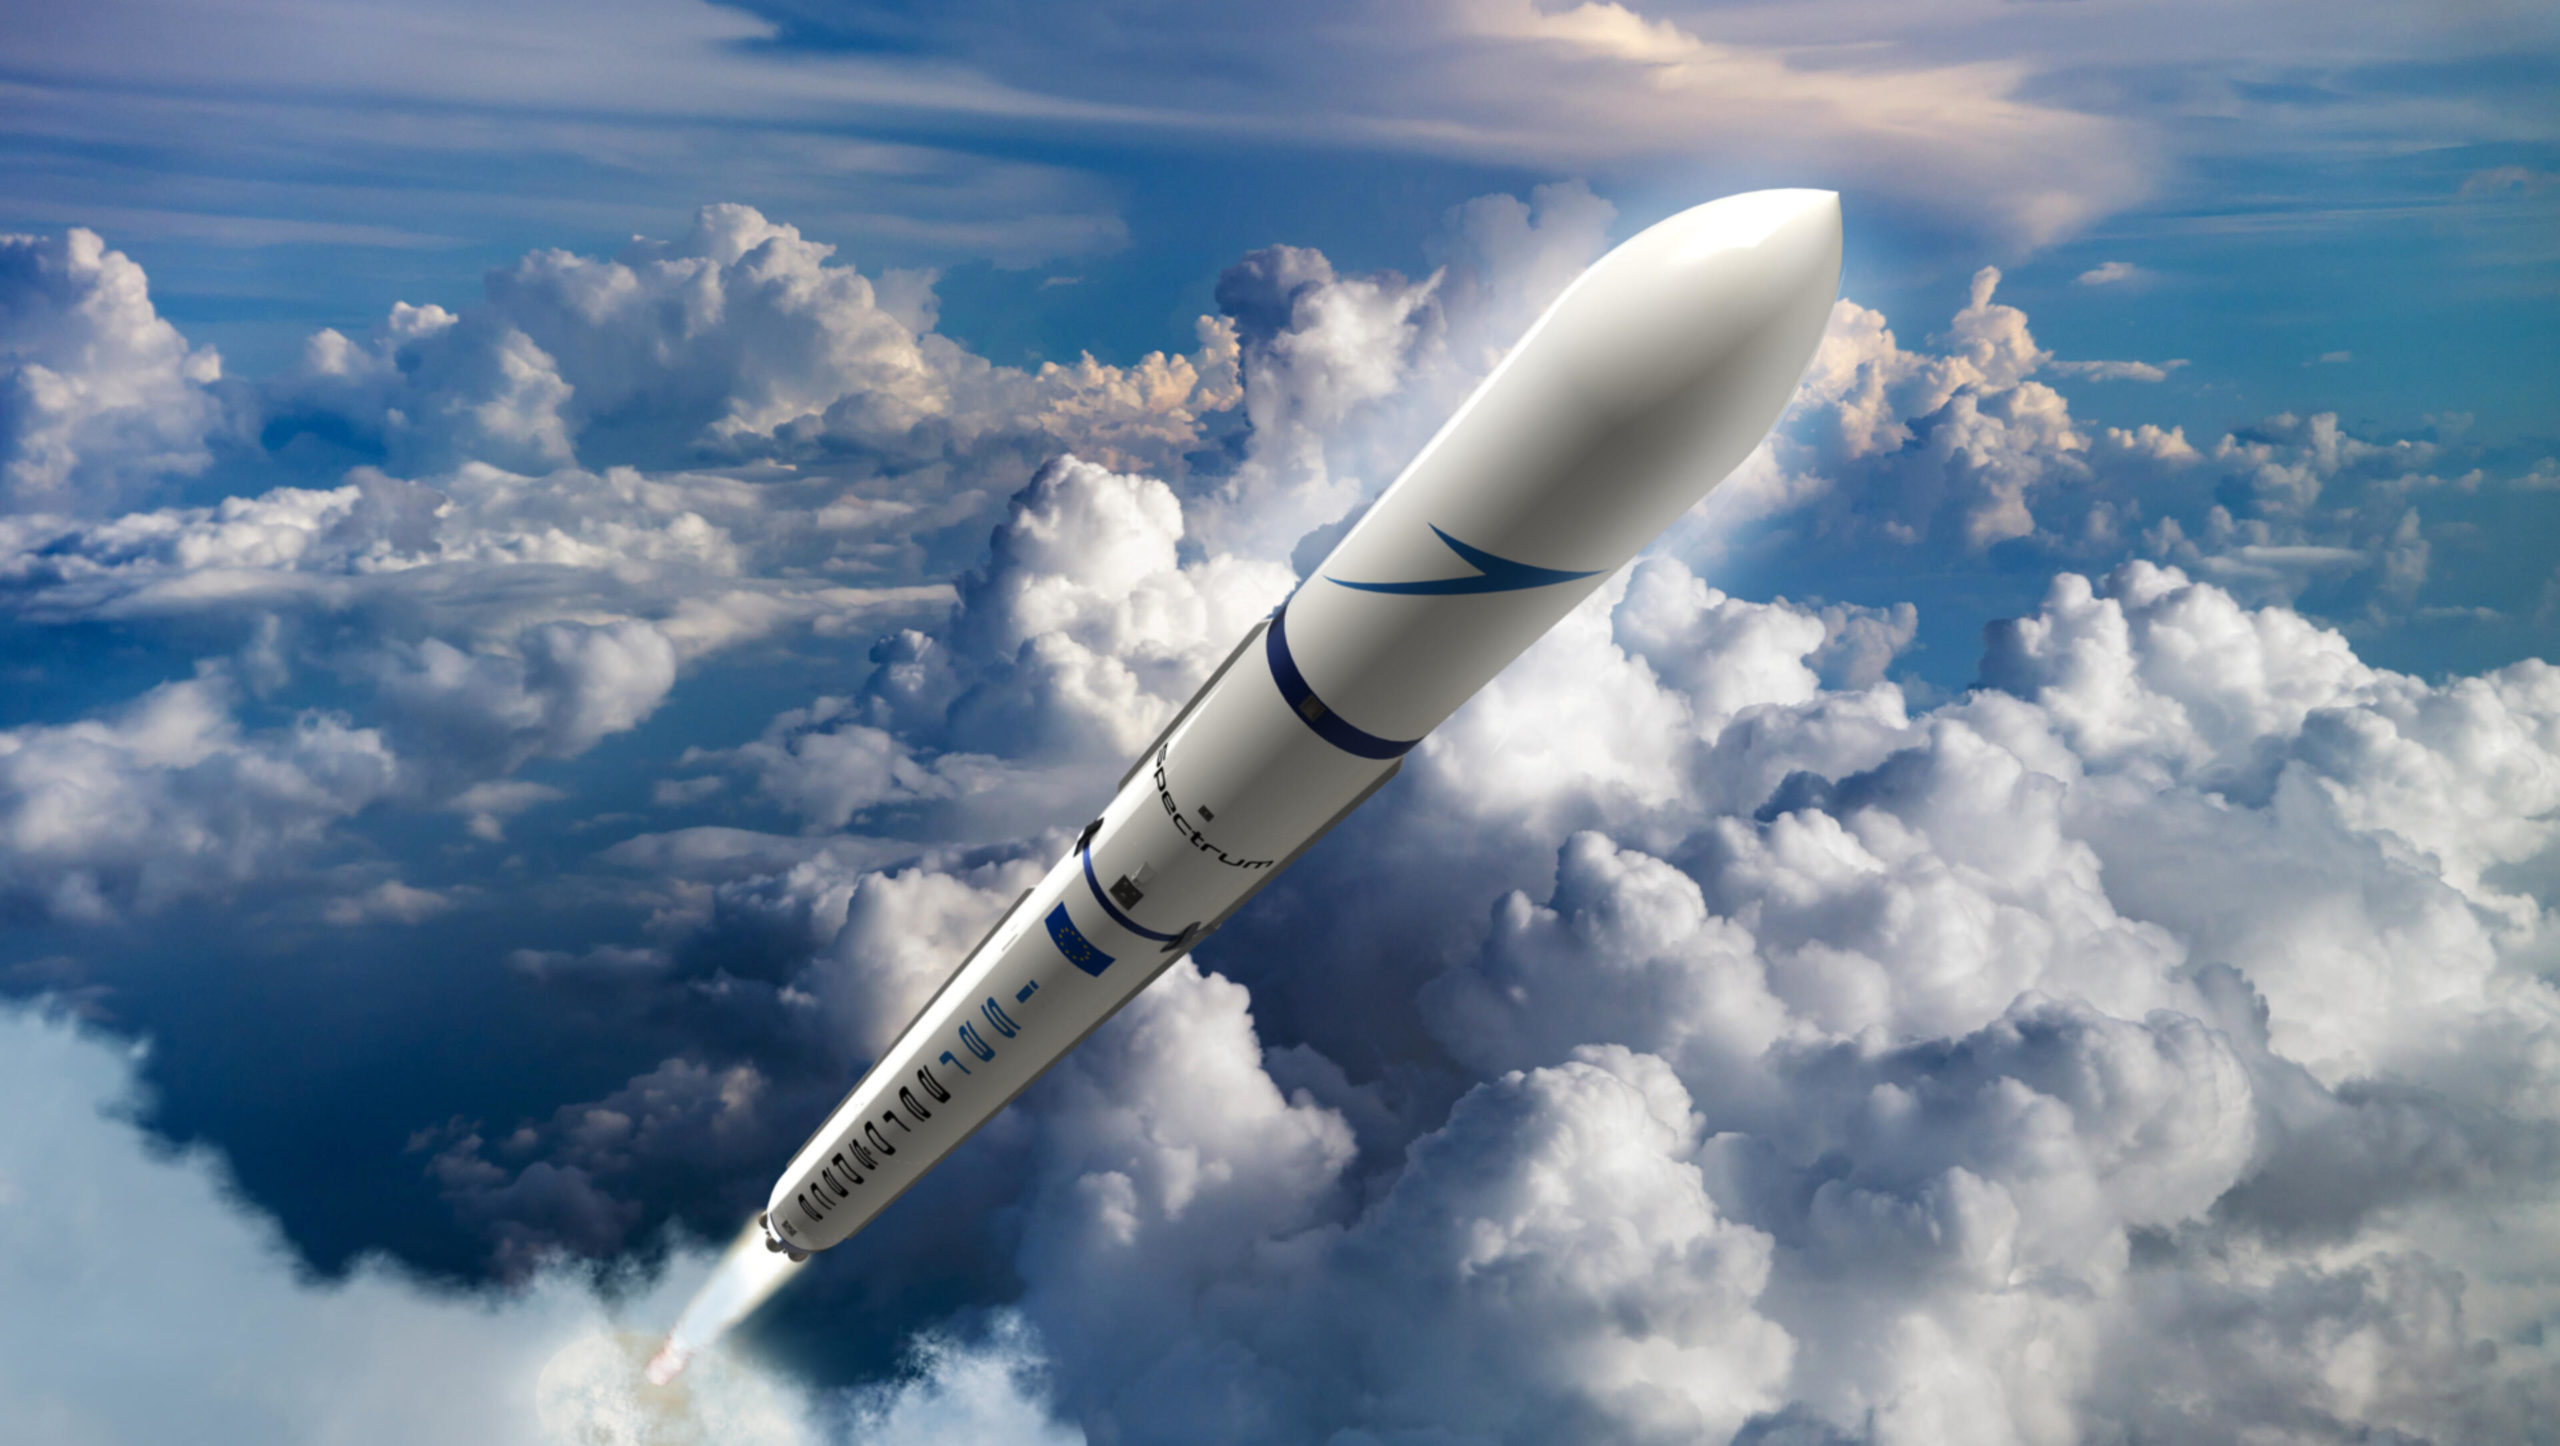 Spectrum-Rakete von Isar Aerospace. © Isar Aerospace